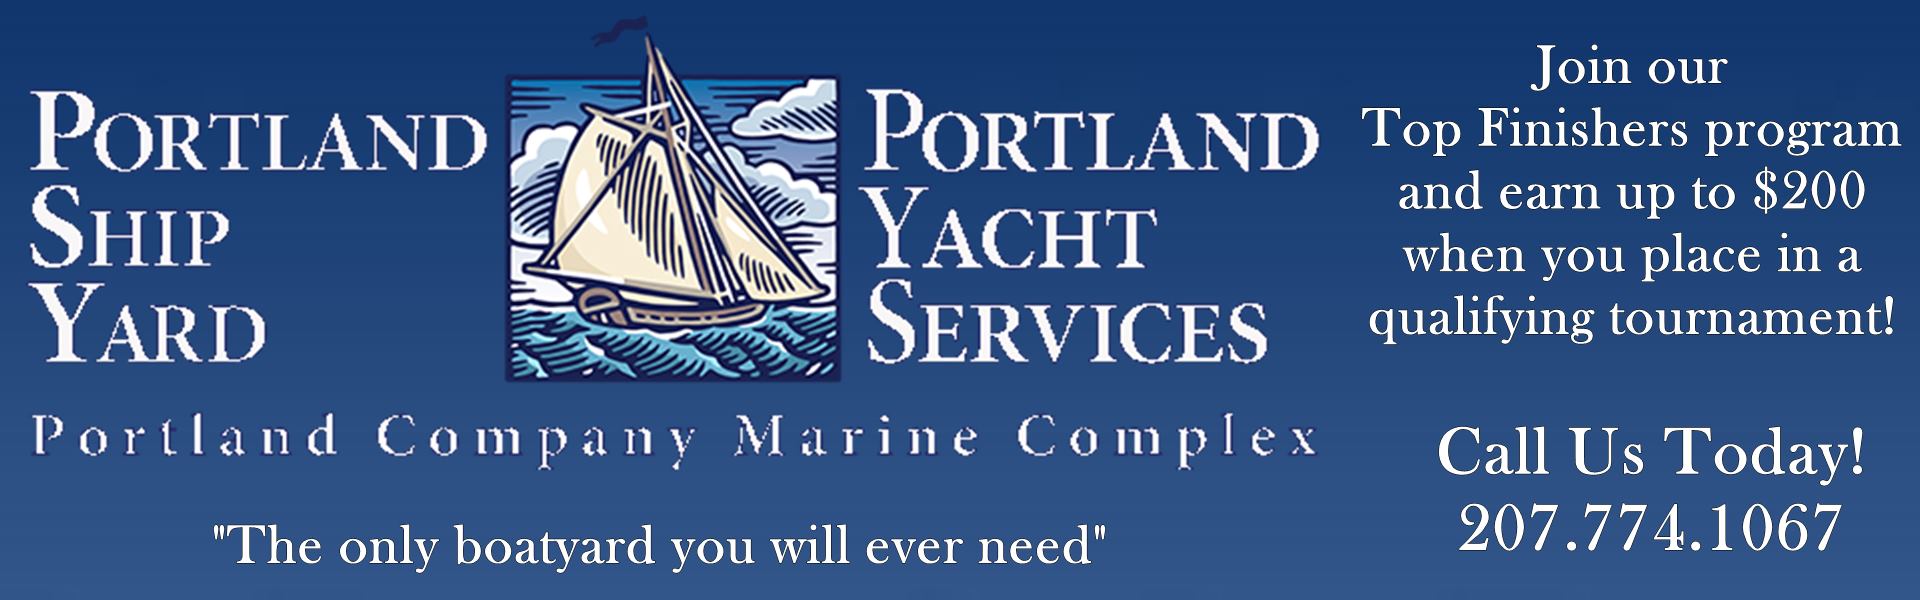 Portland Yacht Services